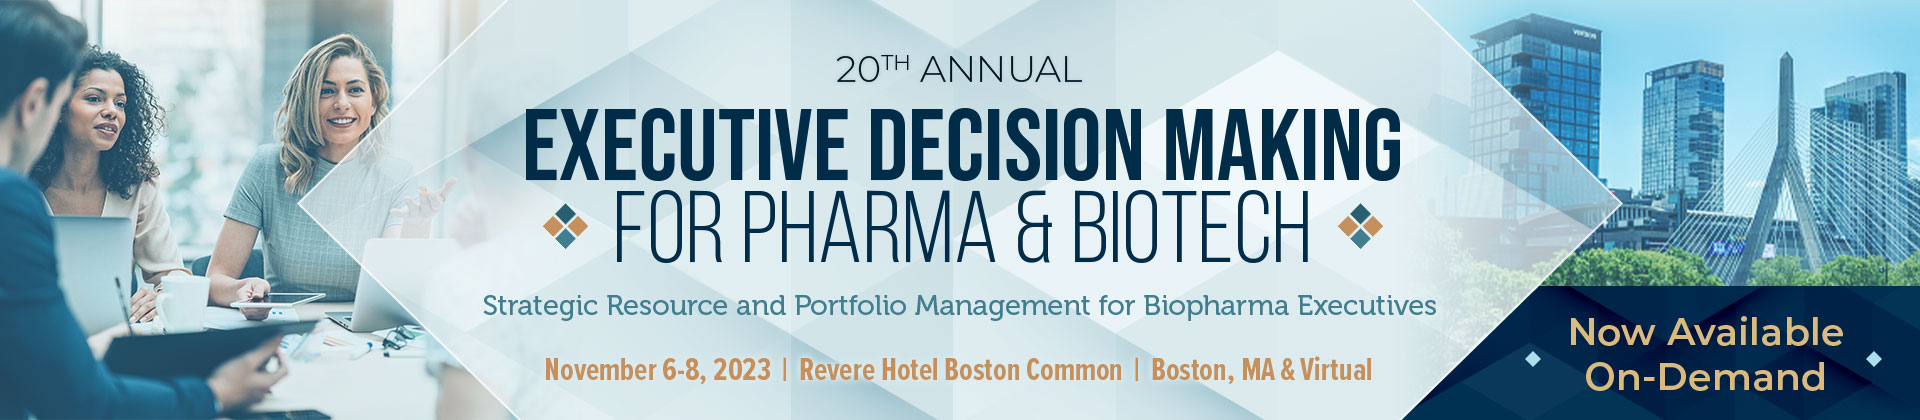 Executive Decision Making For Pharma & BioTech - Novermber 6-8, 2023